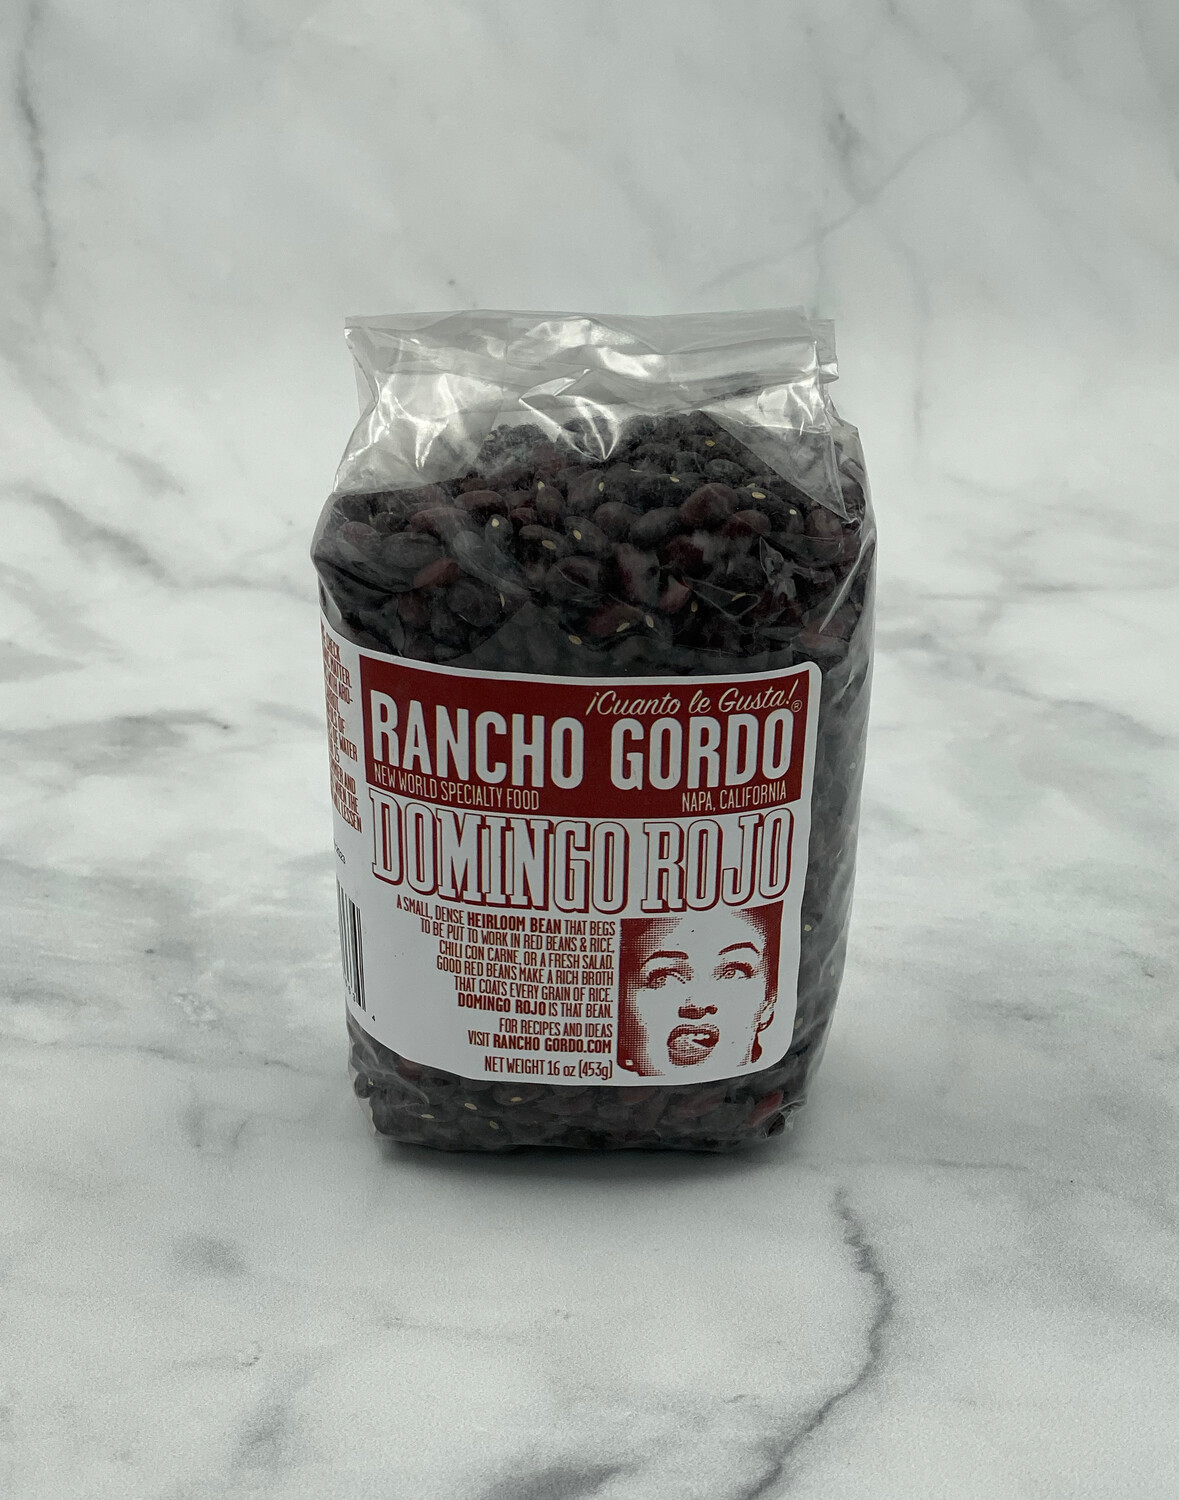 Domingo Rojo Beans Rancho Gordo